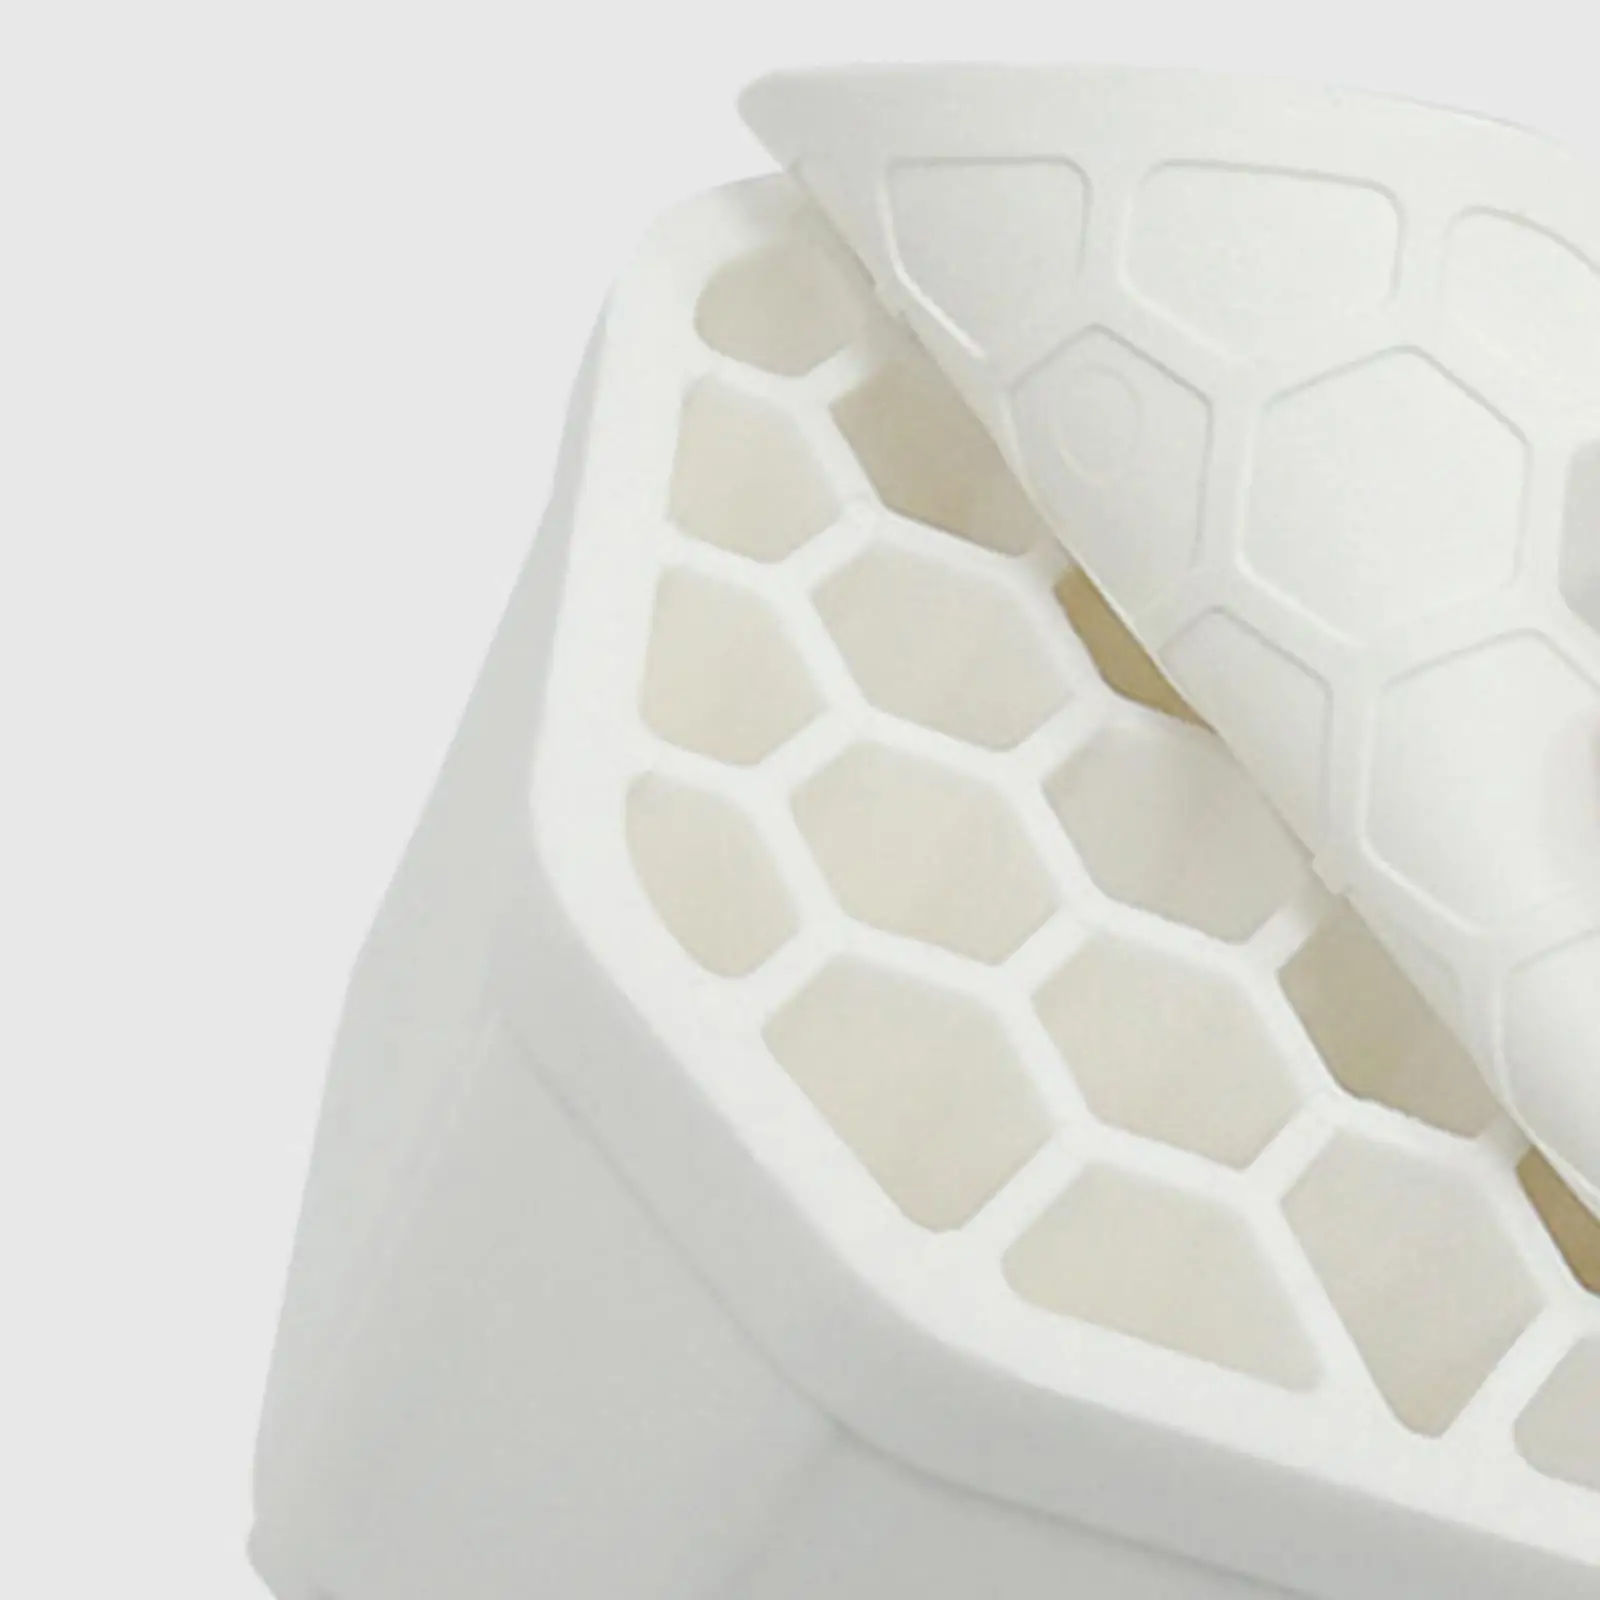 4x Laundry Machine Anti Vibration Mat Anti Skid Multifunctional Durable Washing Machine Support Pads for Dryer Washer Home